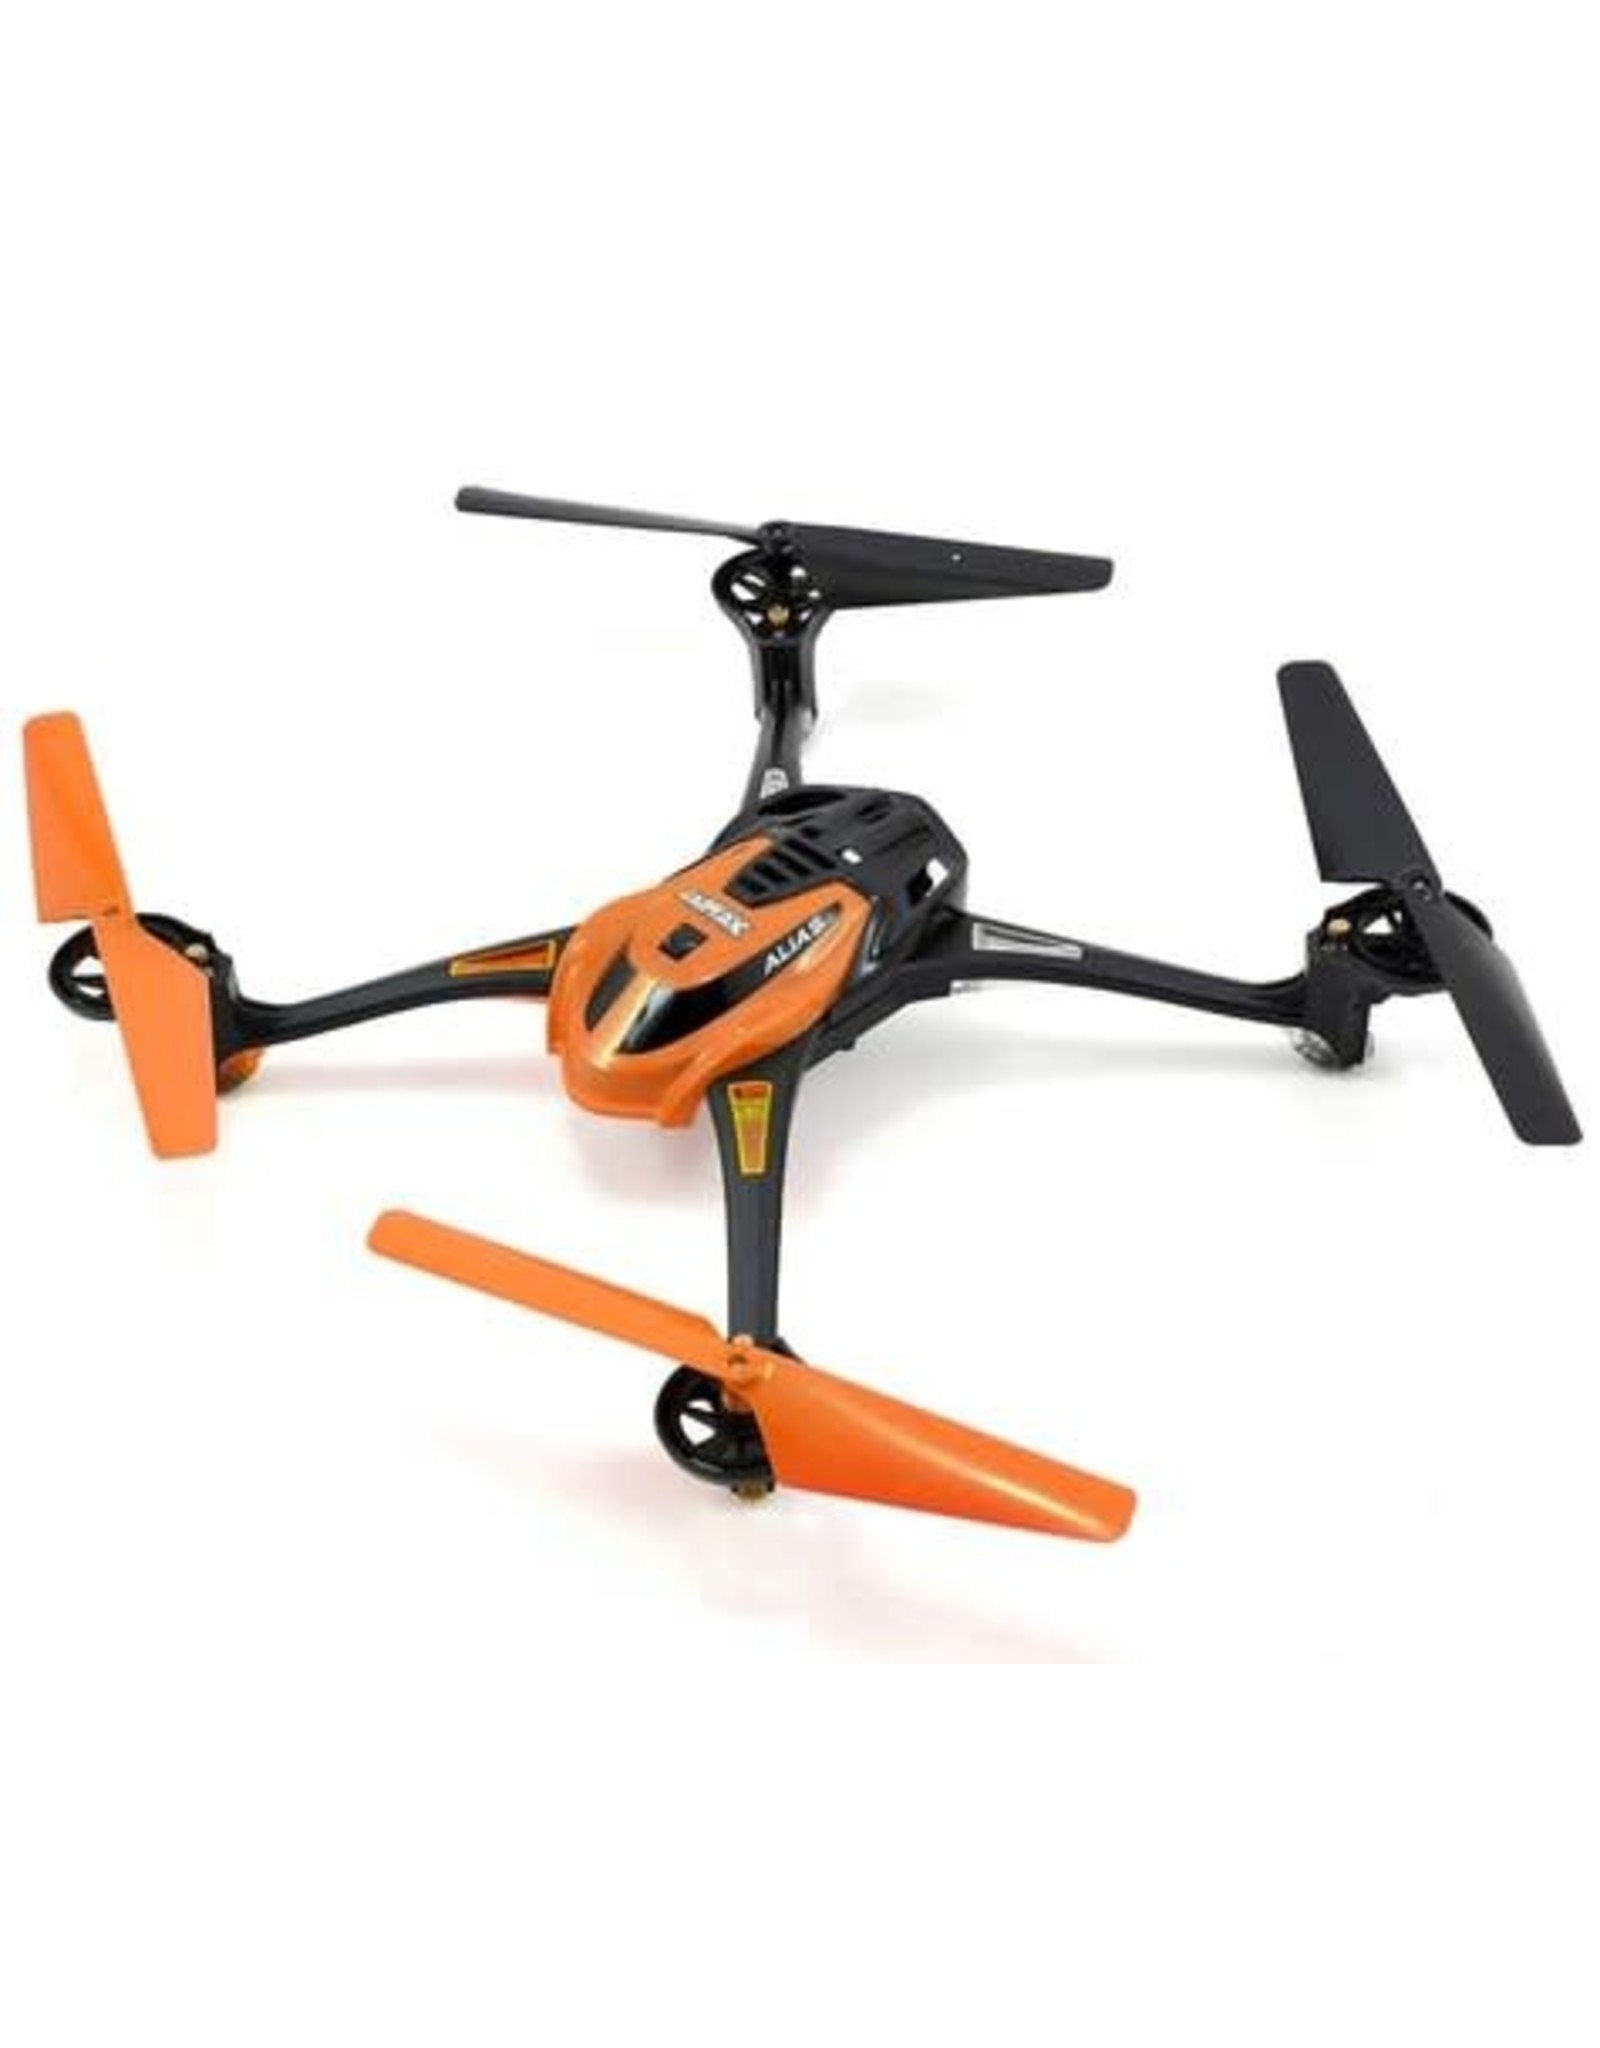 LaTrax Alias Ready-To-Fly Micro Electric Quadcopter Drone (Orange) - BPCS Hobbies